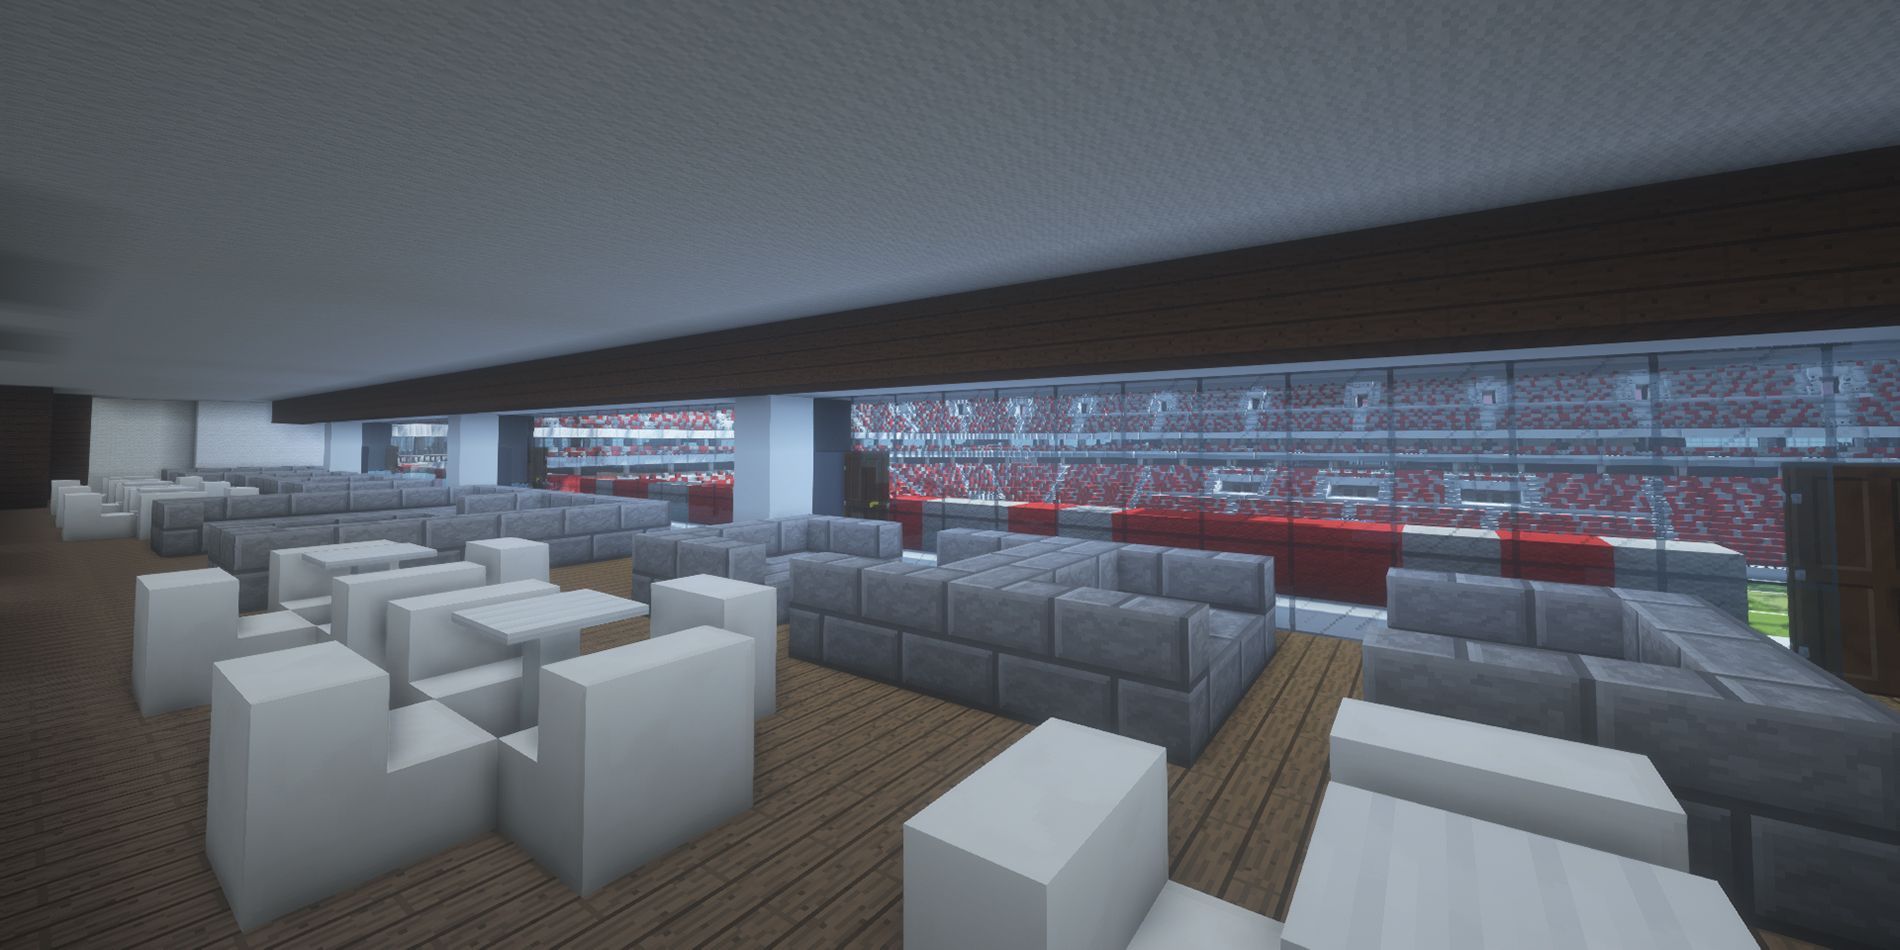 Minecraft Soccer Stadium Box Seats Interior